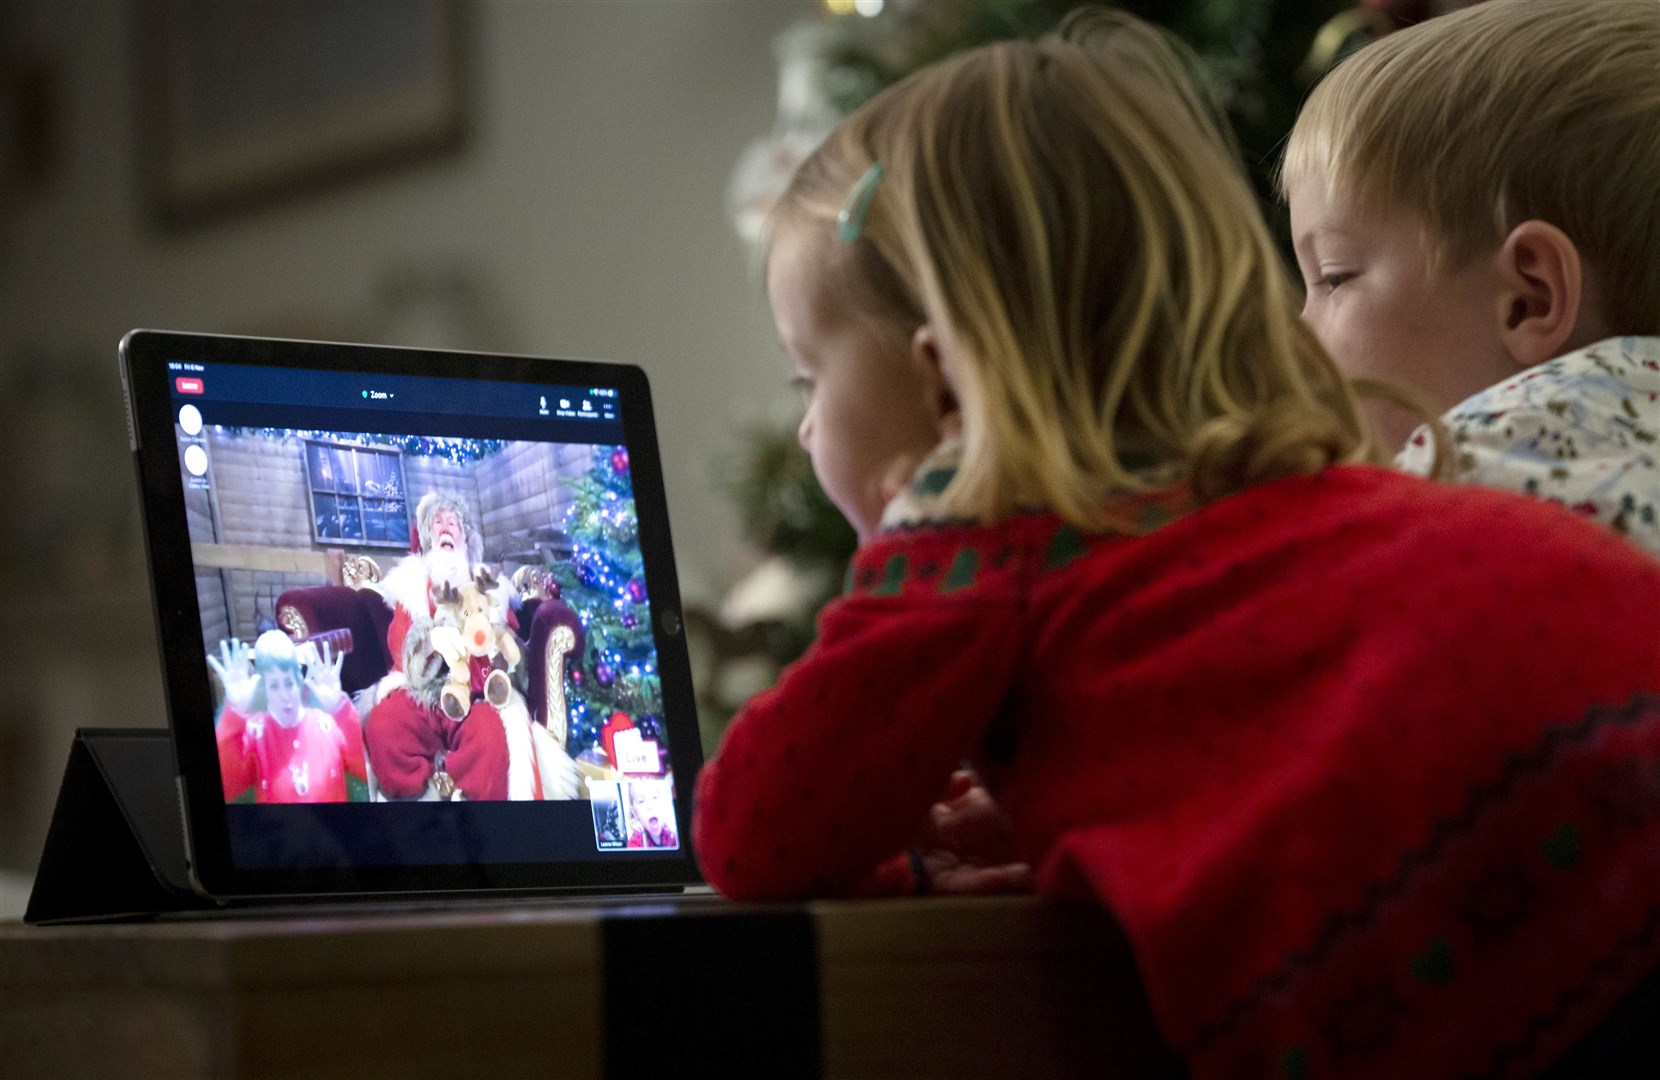 Amelia, aged 2, and Jacob, aged 4, talk to Santa Claus via live video stream.